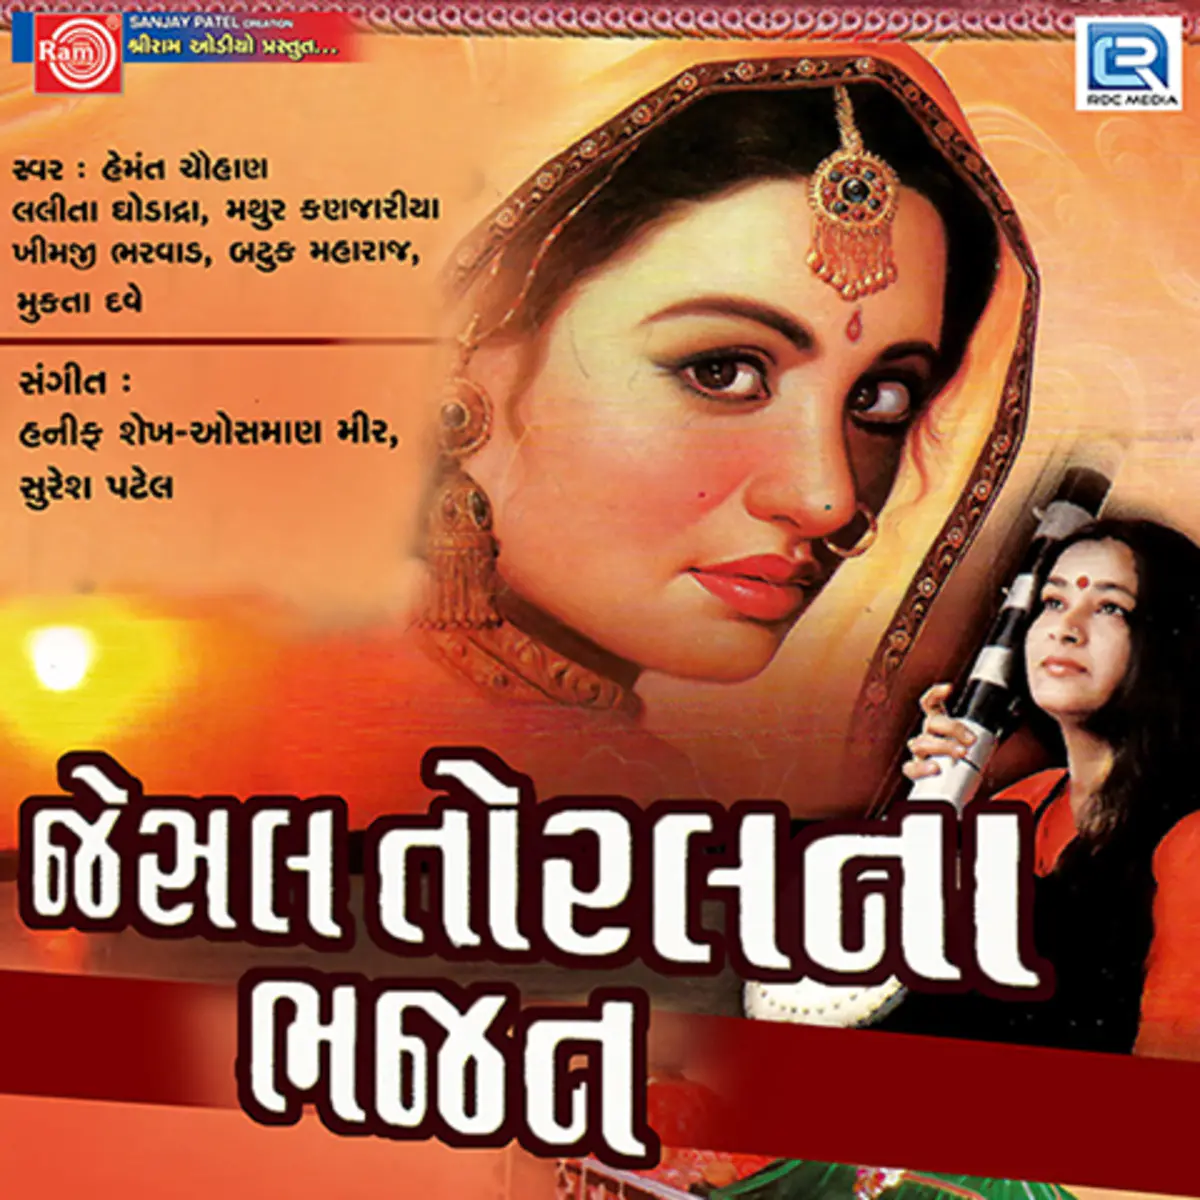 Jesal Toral Na Bhajan Songs Download Jesal Toral Na Bhajan Mp3 Gujarati Songs Online Free On Gaana Com Ramdevpirno rathado (a collection of ramapir bhajan). jesal toral na bhajan songs download